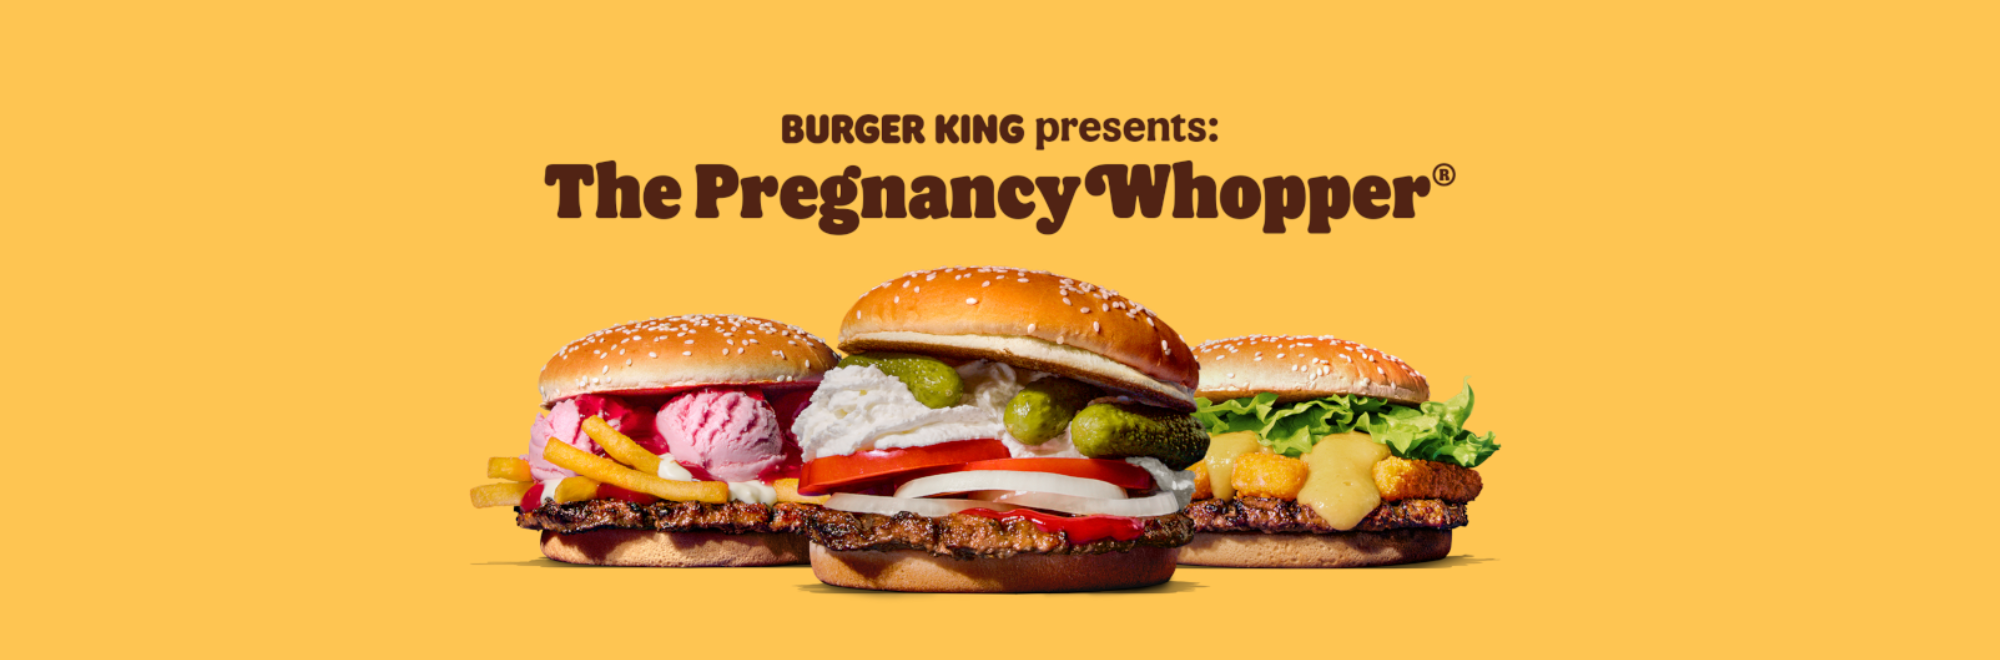 Creative Corner: Marcus Rashford X Beats Mural, Burger King's Pregnancy Whopper and IKEA's Swedish Seedballs